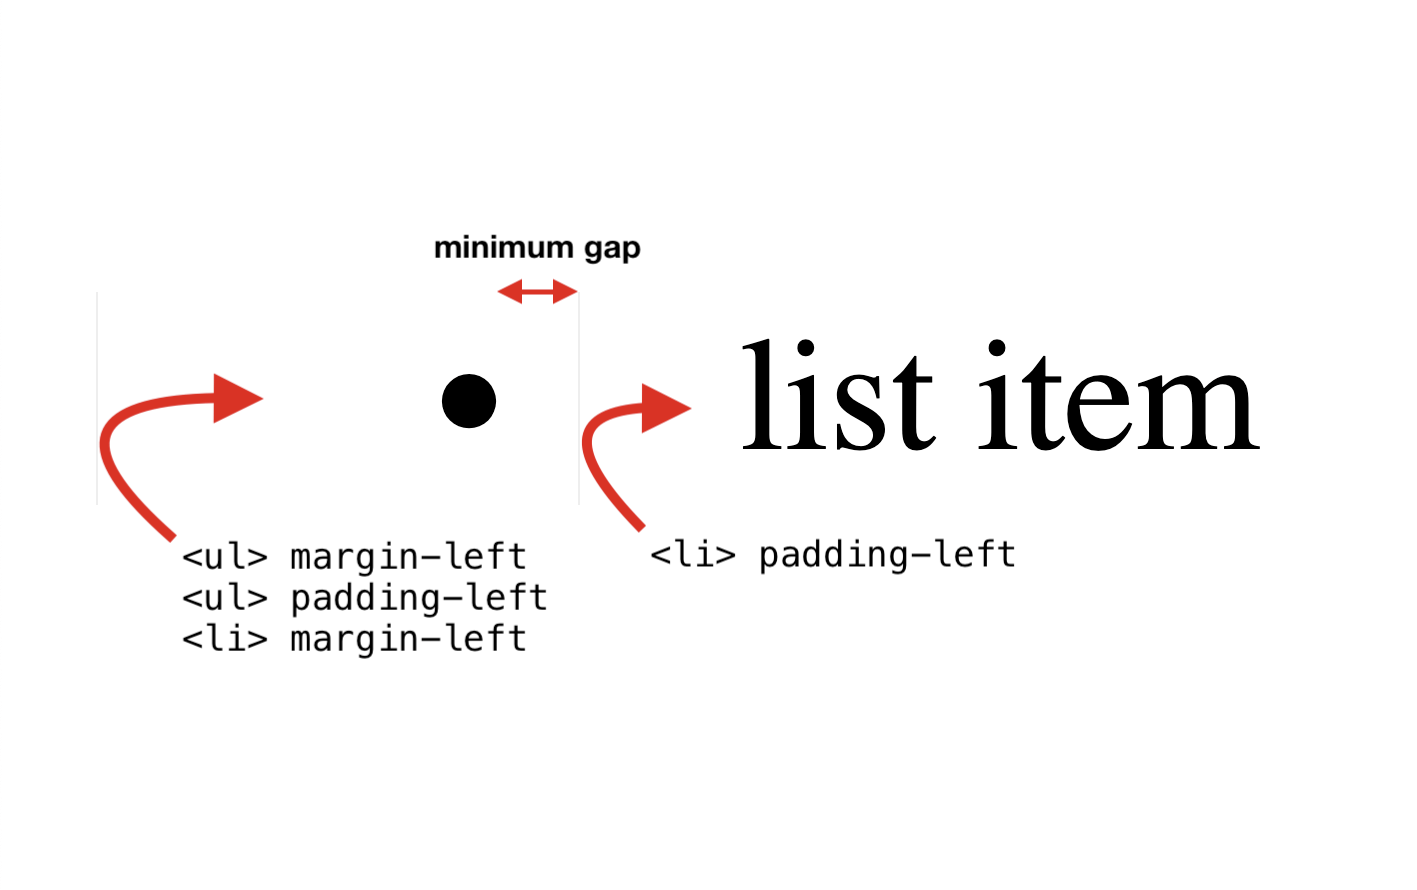 سه ویژگی اول: UL margin-left، UL padding-left، LI margin-left. ویژگی چهارم: LI padding-left.